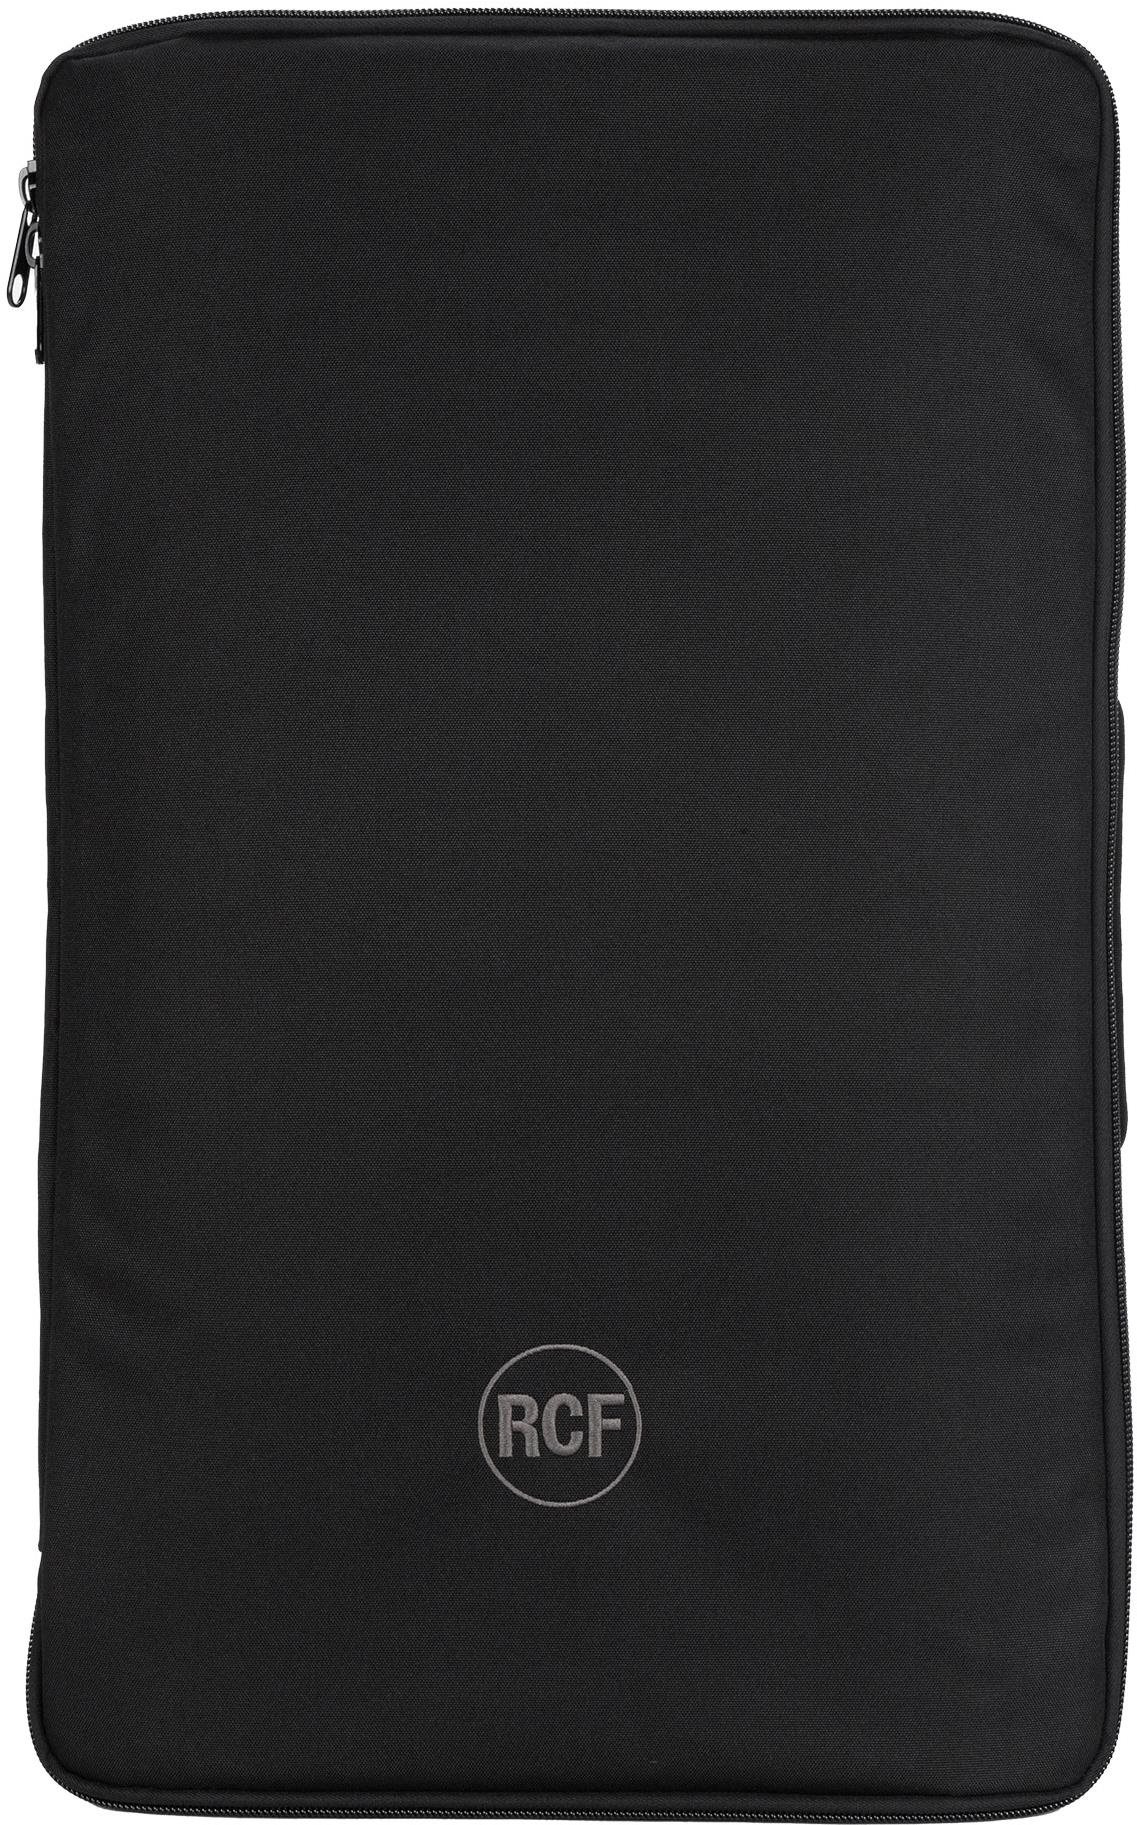 RCF CVR ART 915